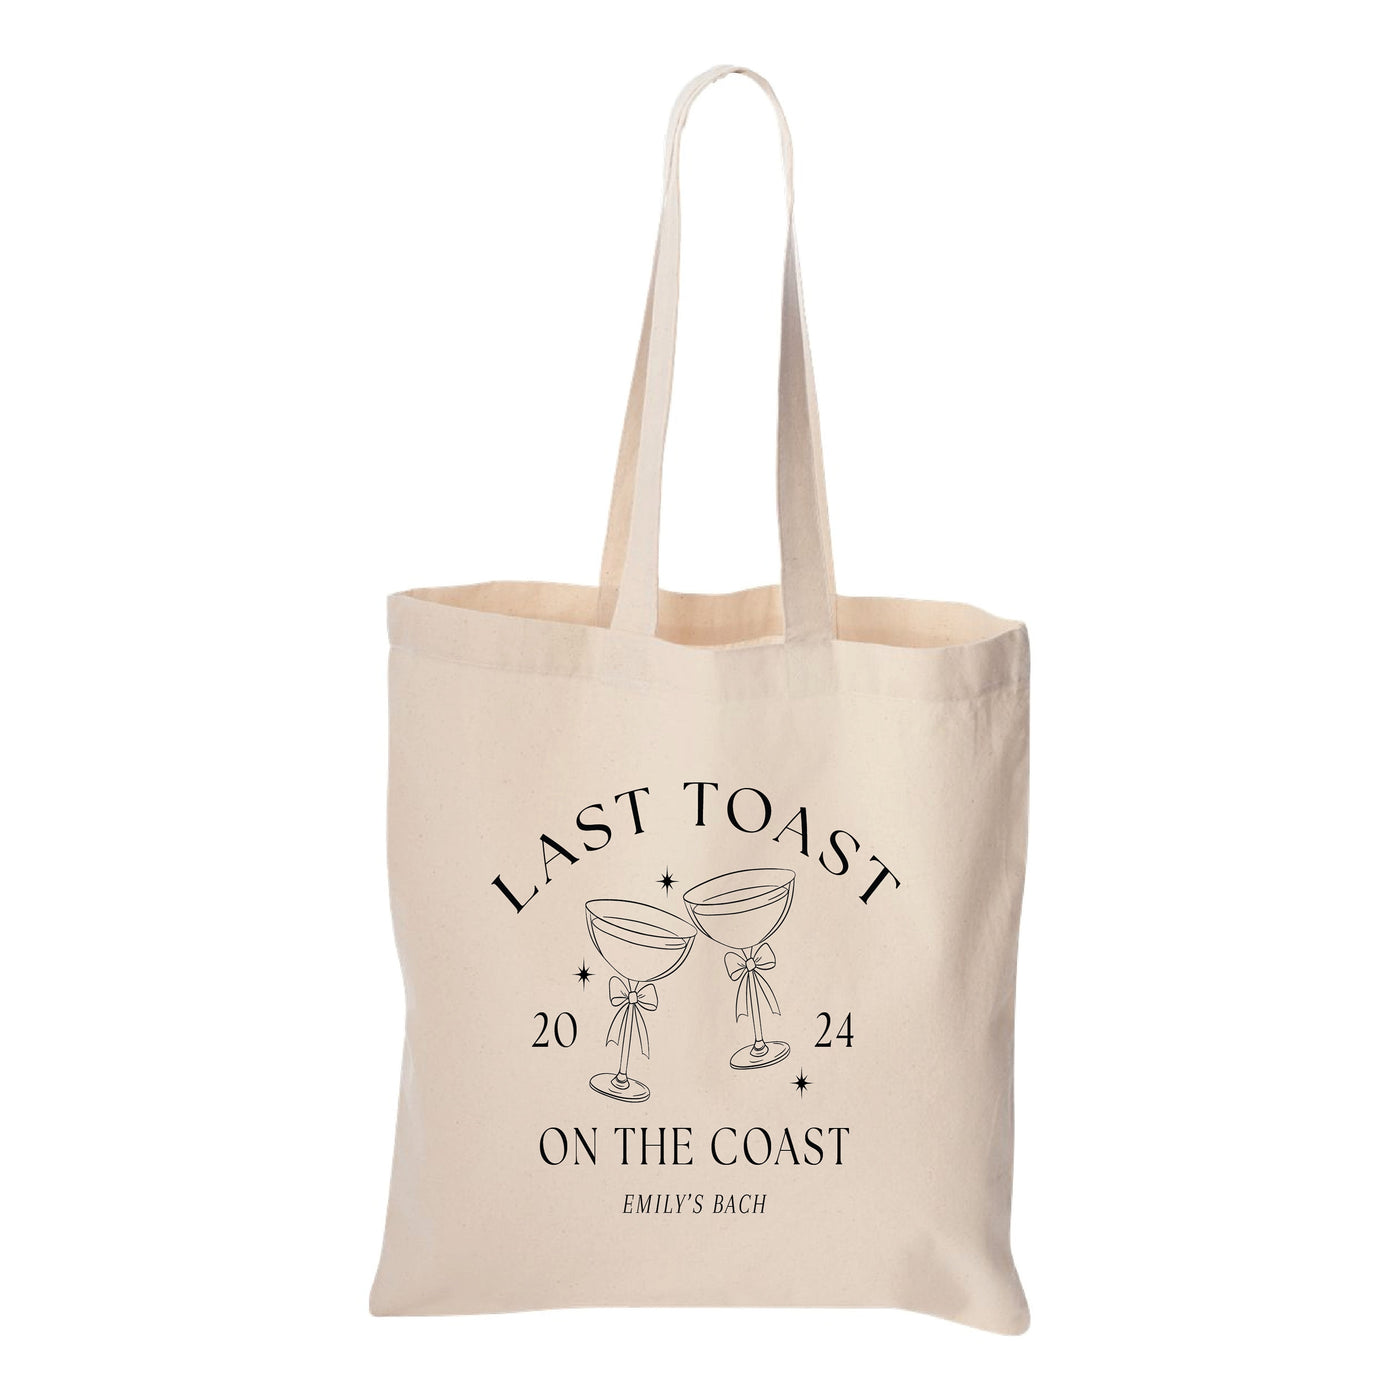 a tote bag that says last toast on the coast